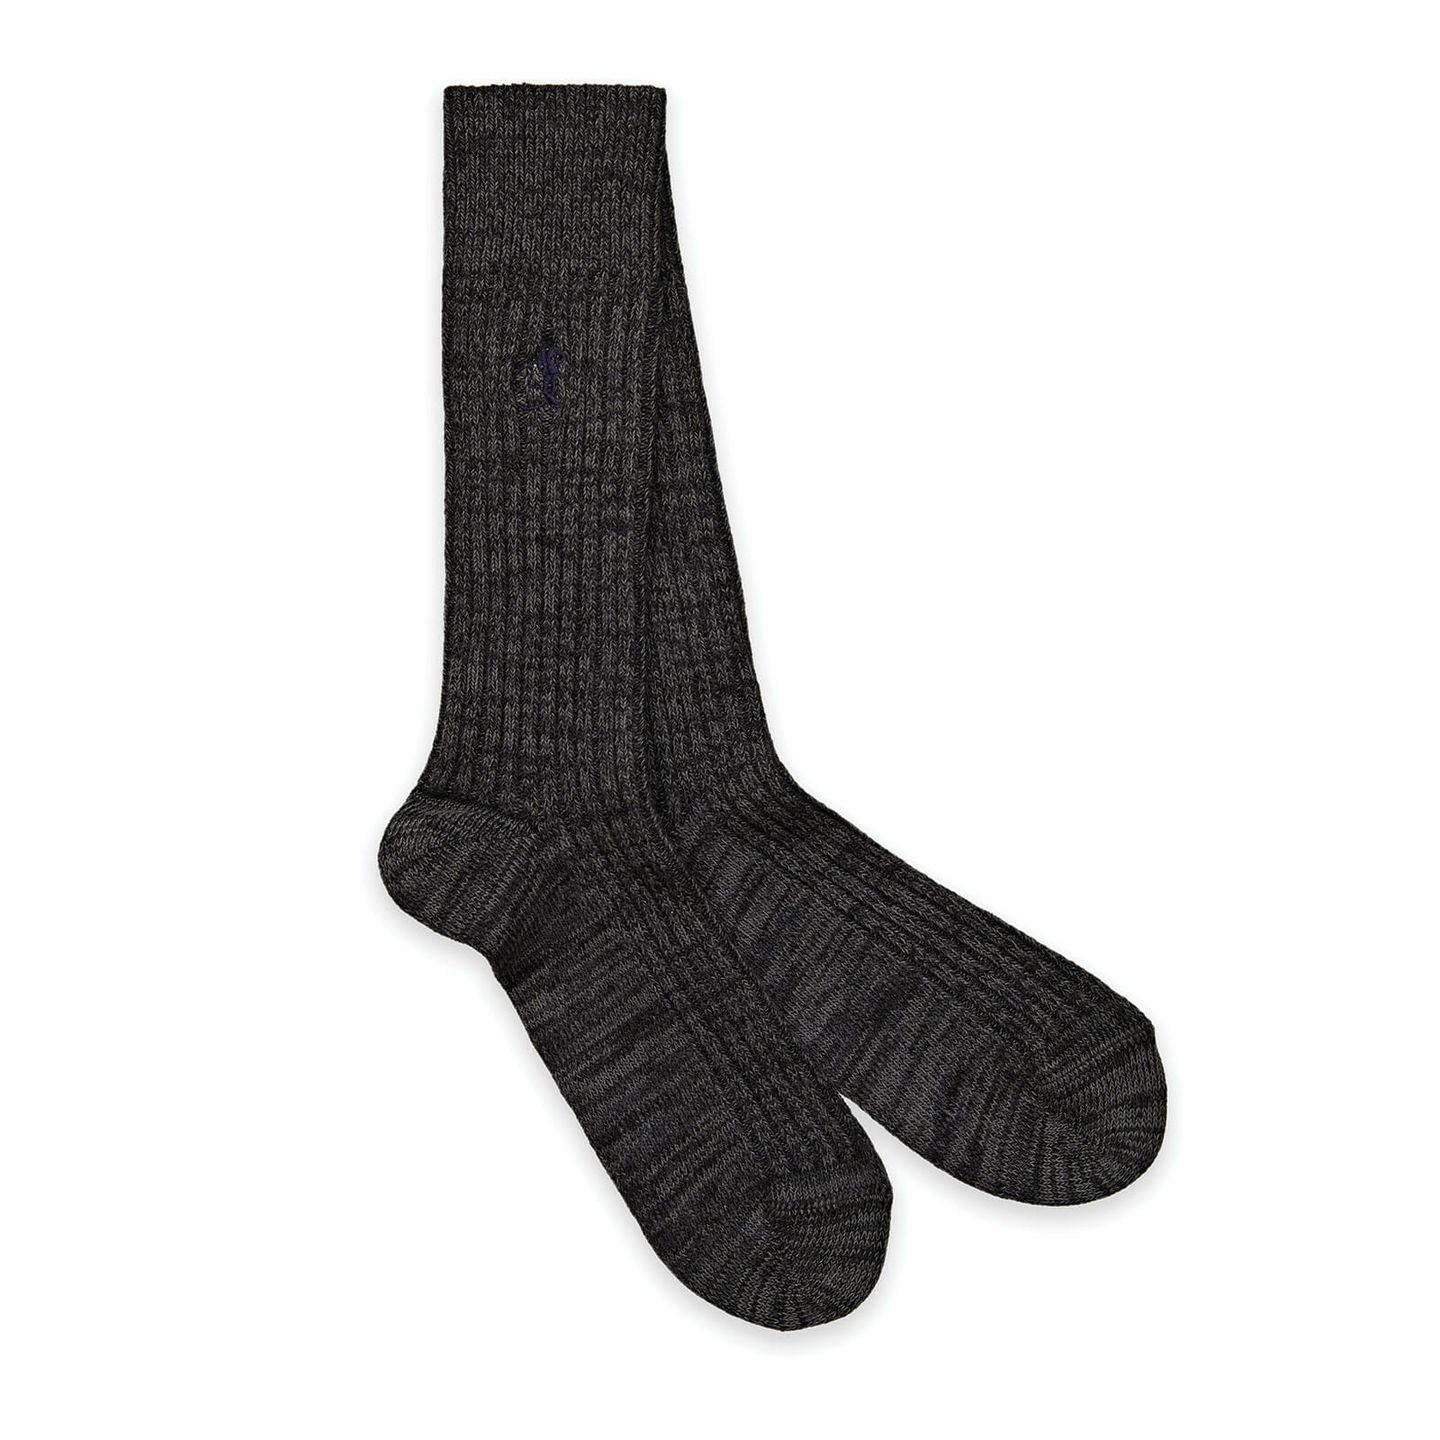 Pair of slate grey boot socks